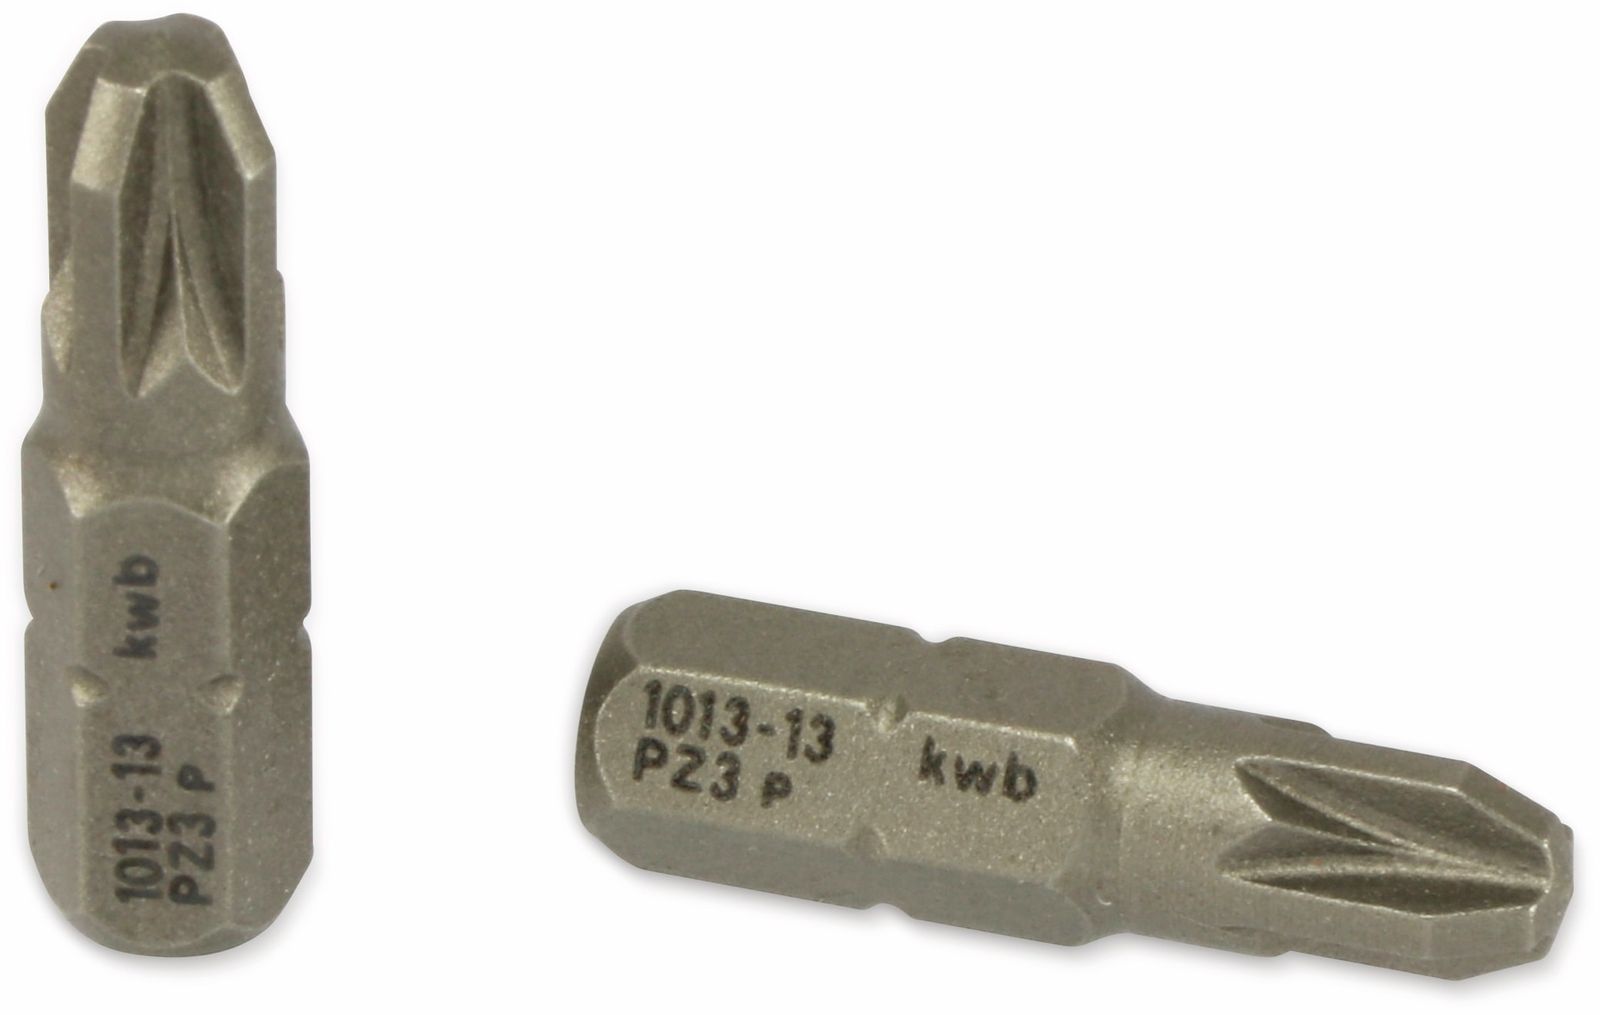 KWB Bit-Set, PZ3, Chrom-Vanadium Stahl, 10 Stück von kwb